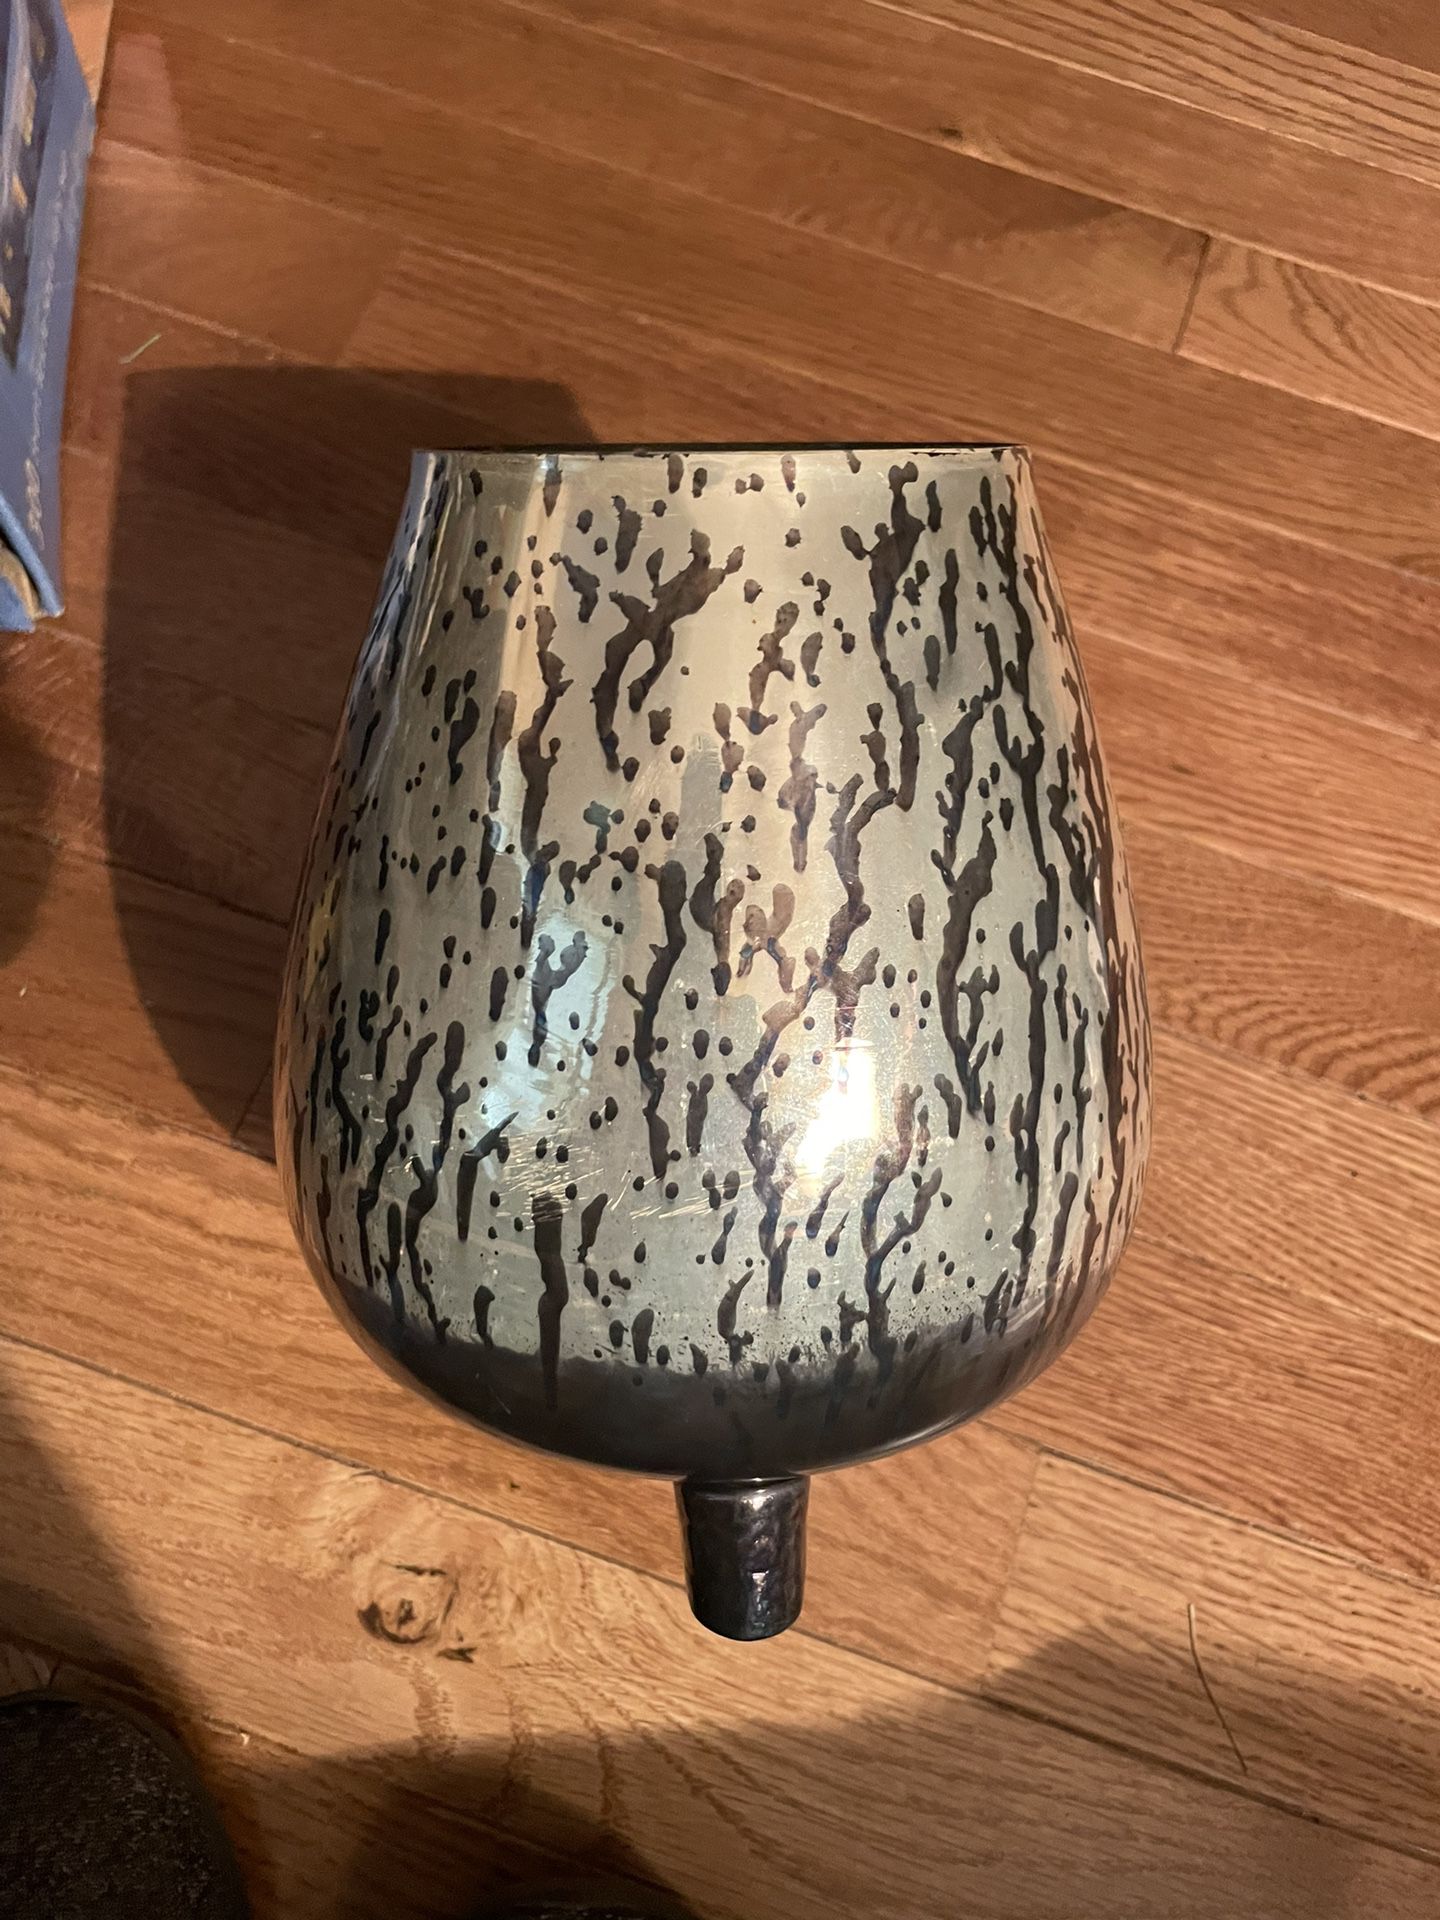 Glass Metallic Vase 8”height X 4” Width -$5